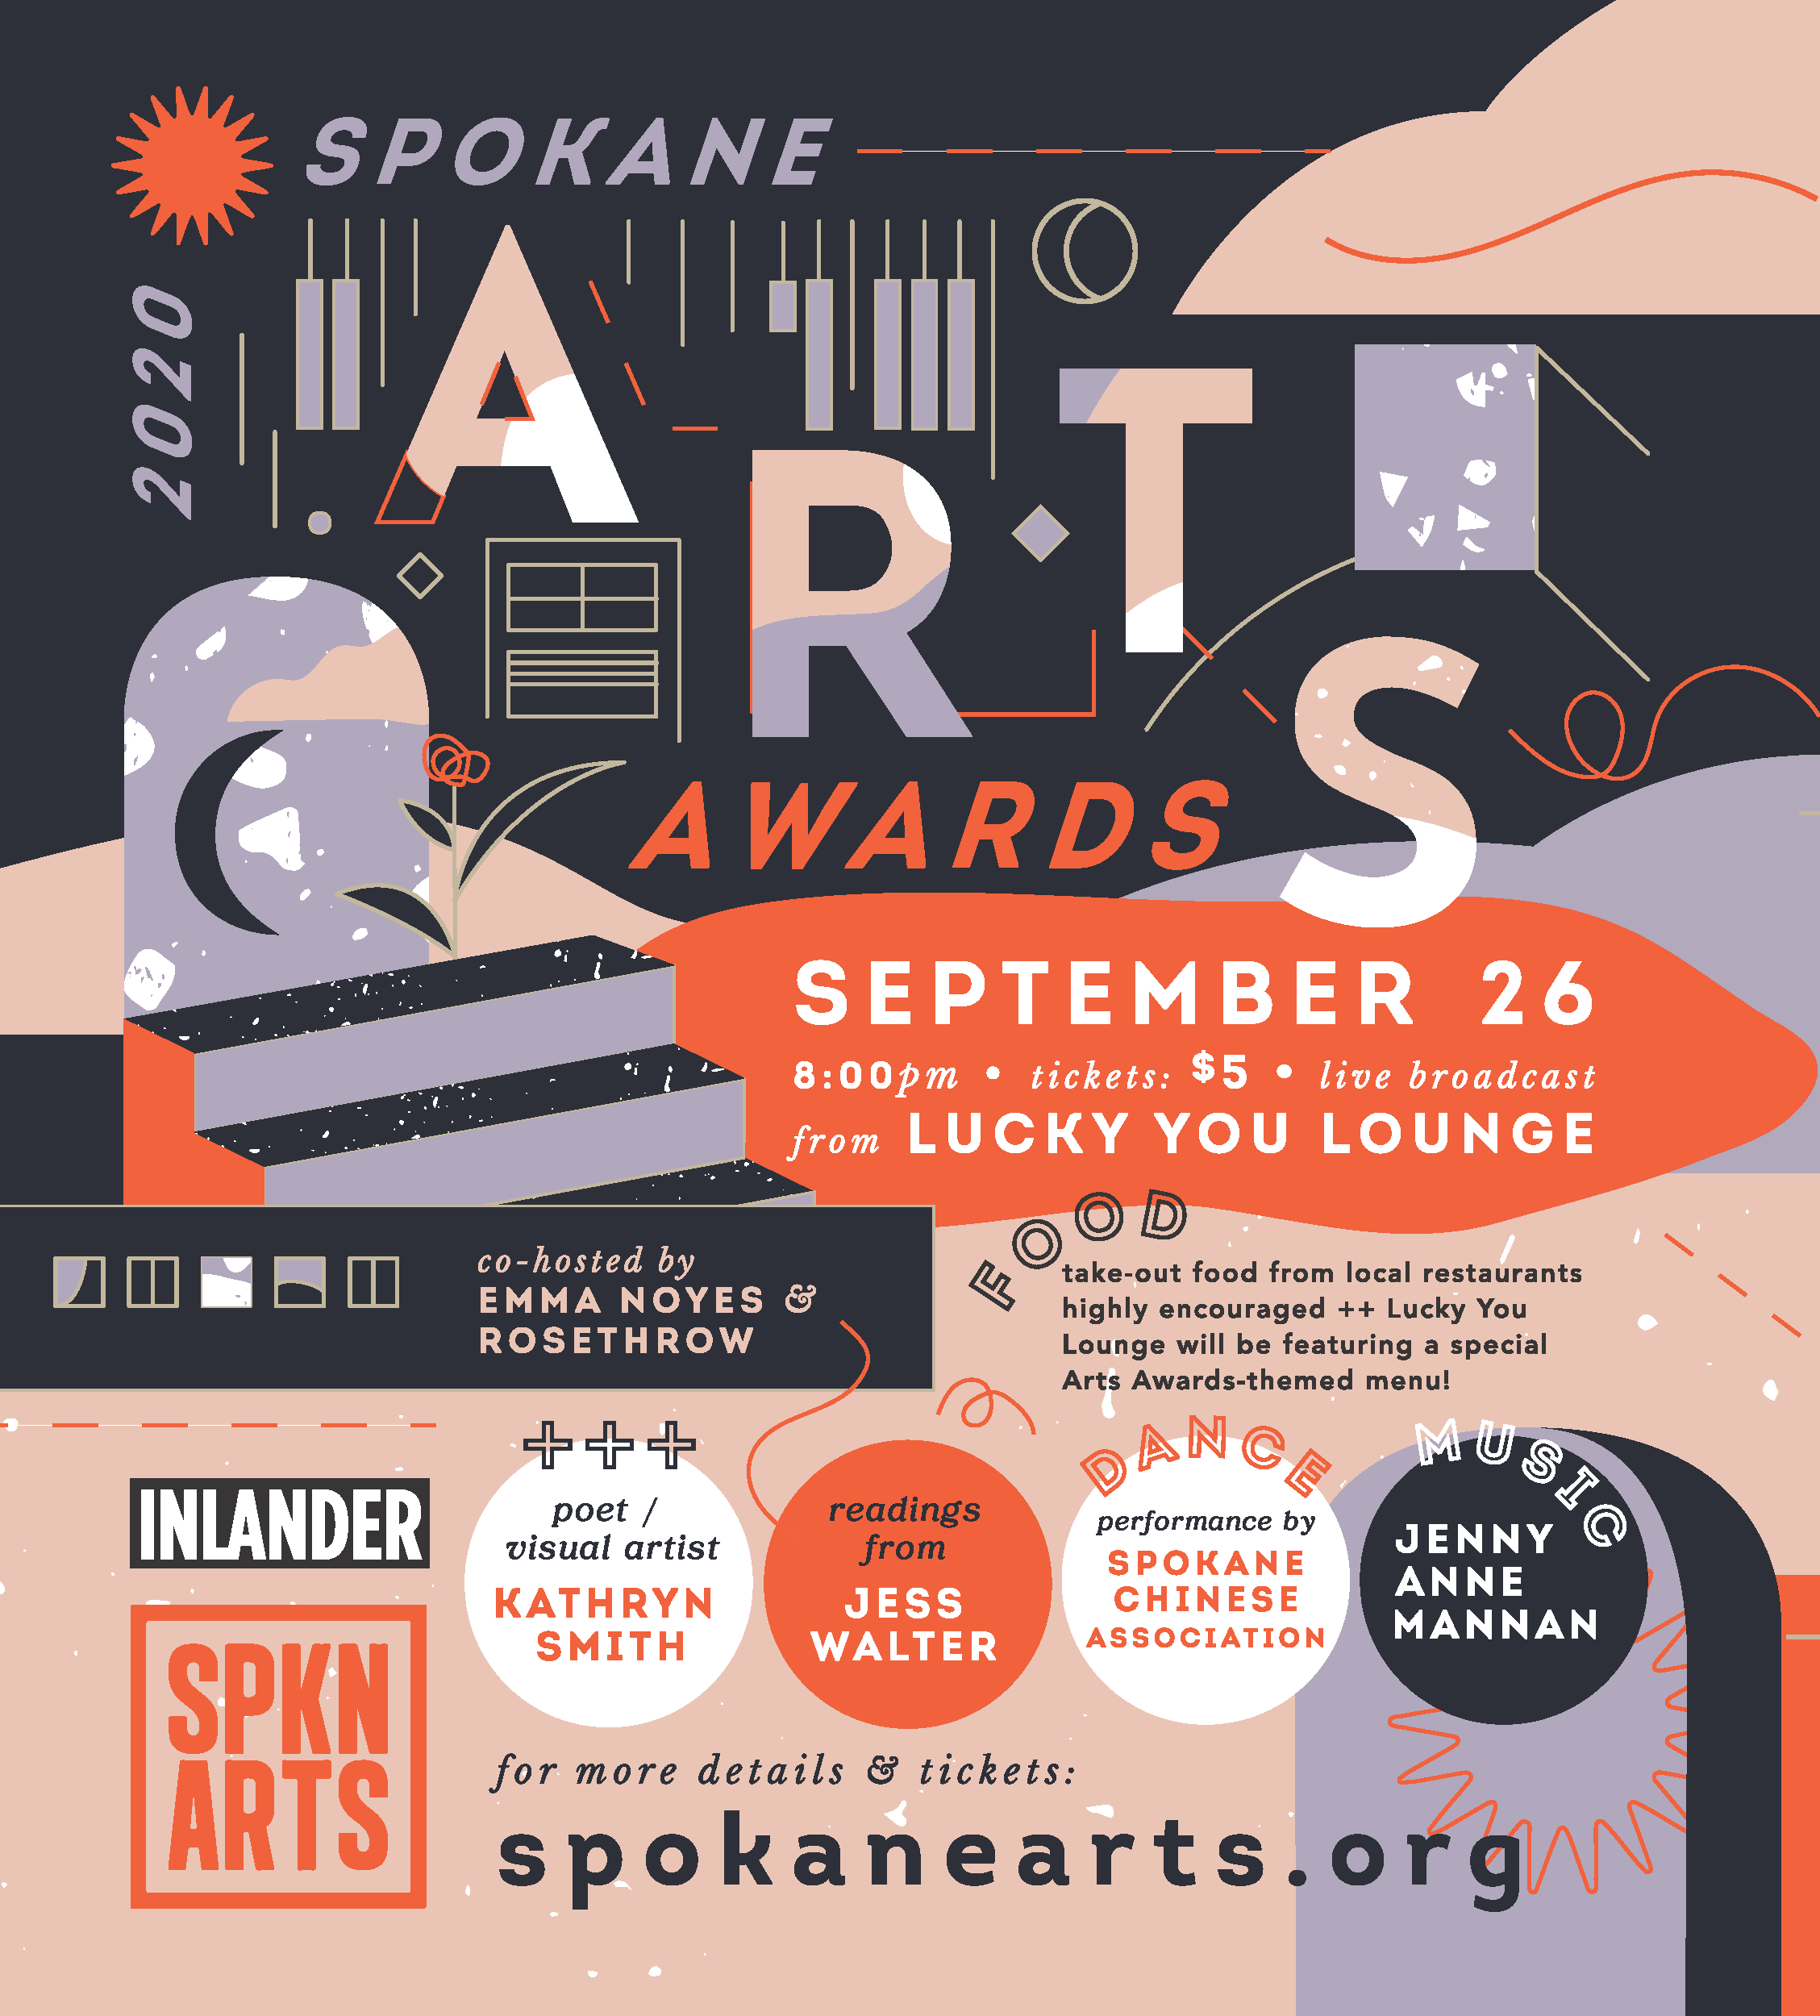 Watch online now! The 2020 Spokane Arts Awards Spokane Arts